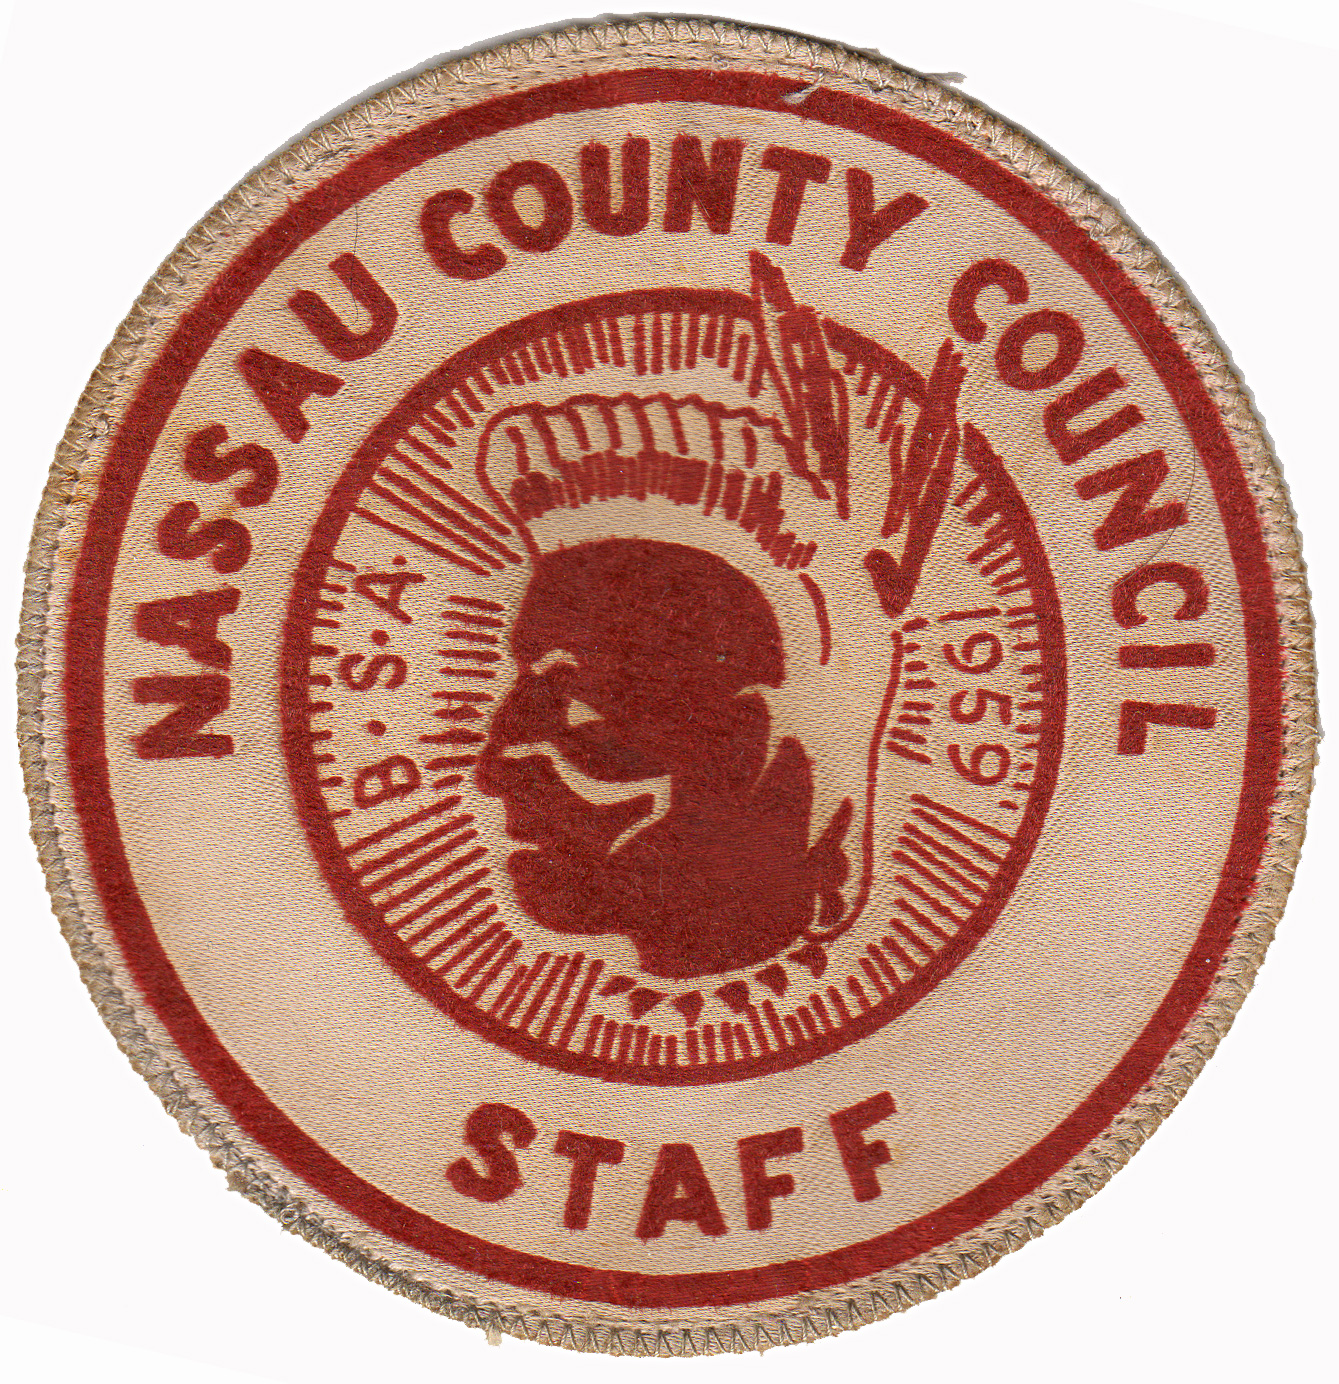 1950 Staff patch